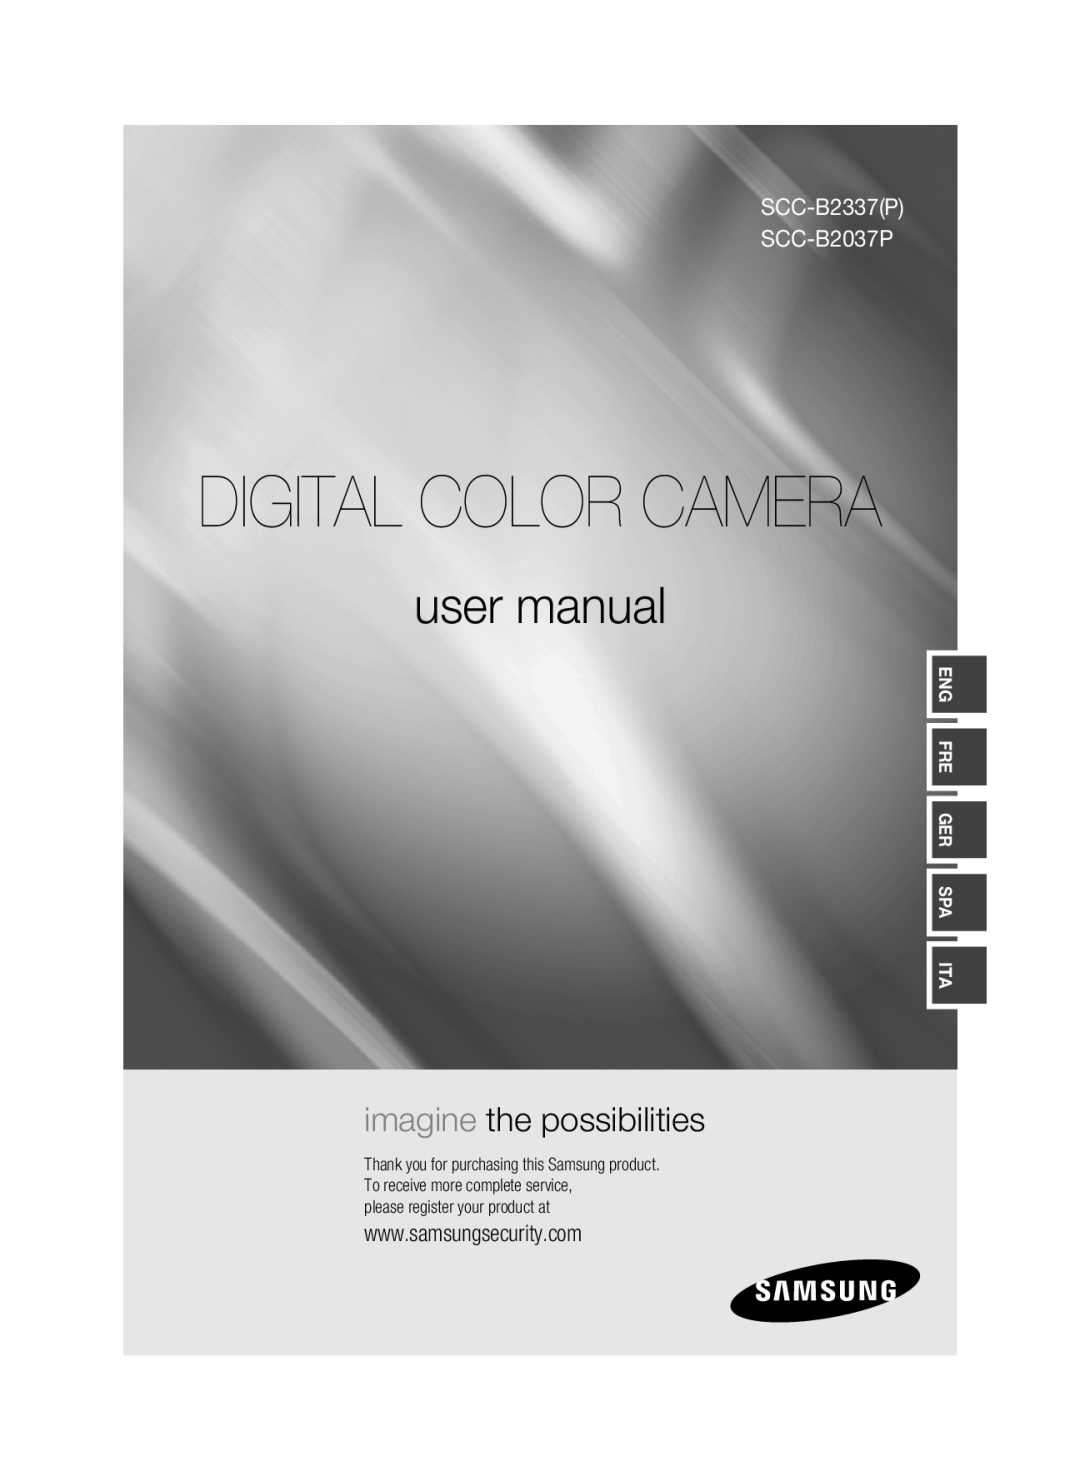 Samsung SCC-B2337N user manual Digital Color Camera, imagine the possibilities, SCC-B2337P SCC-B2037P 